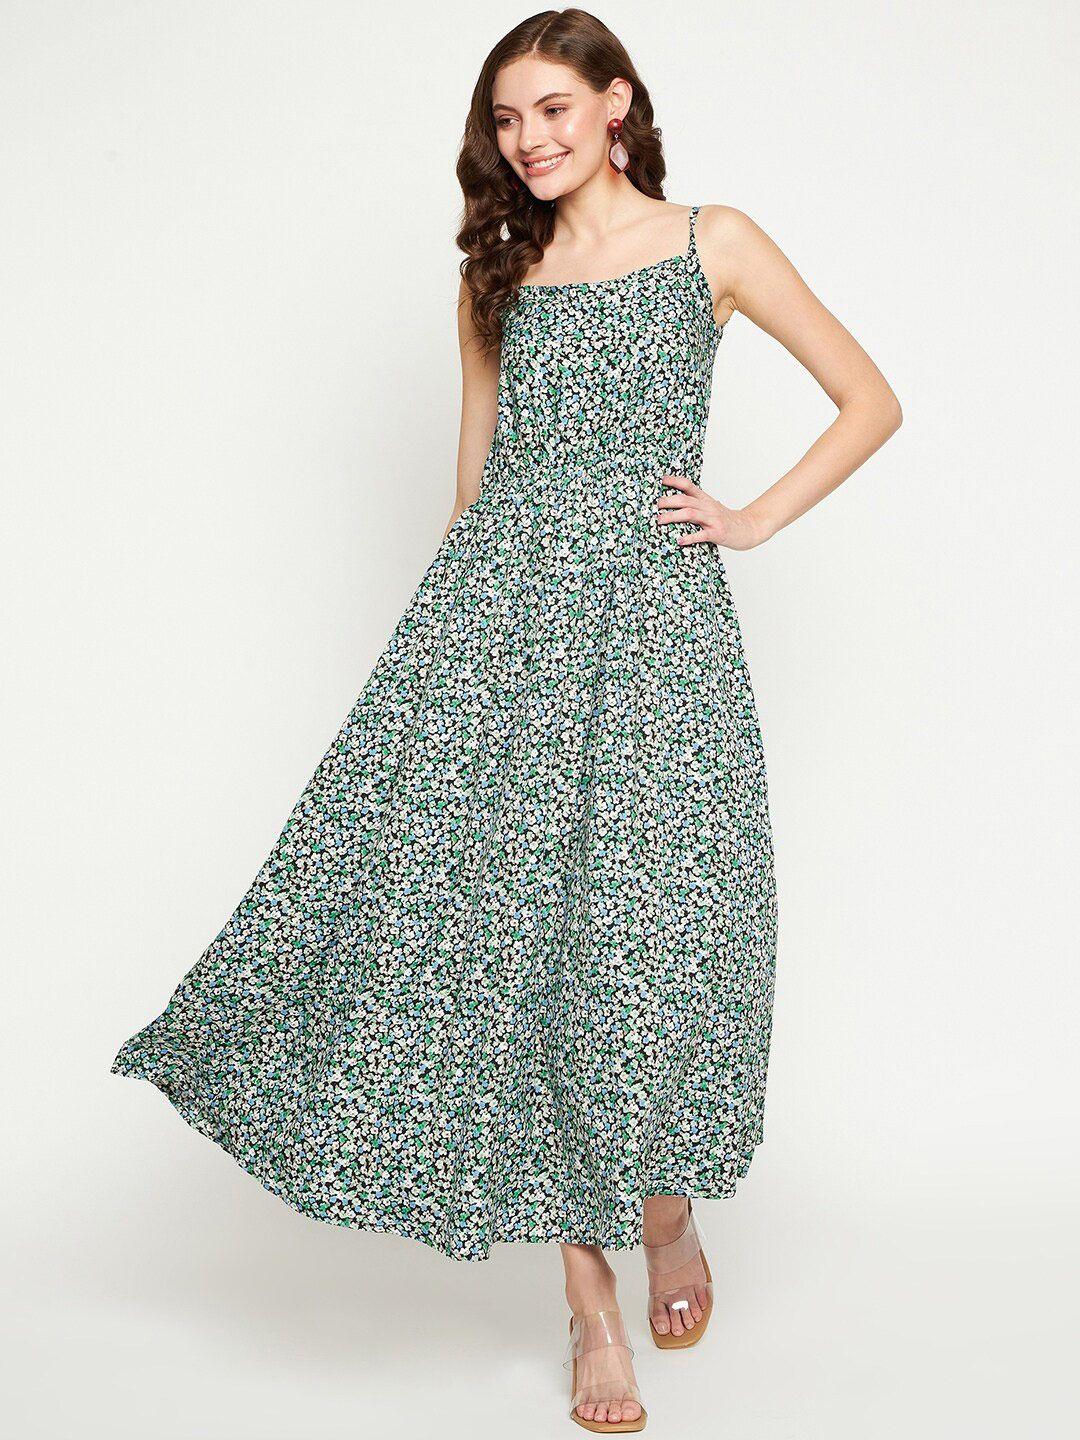 fashfun-floral-printed-shoulder-straps-gathered-detailed-fit-&-flare-midi-dress